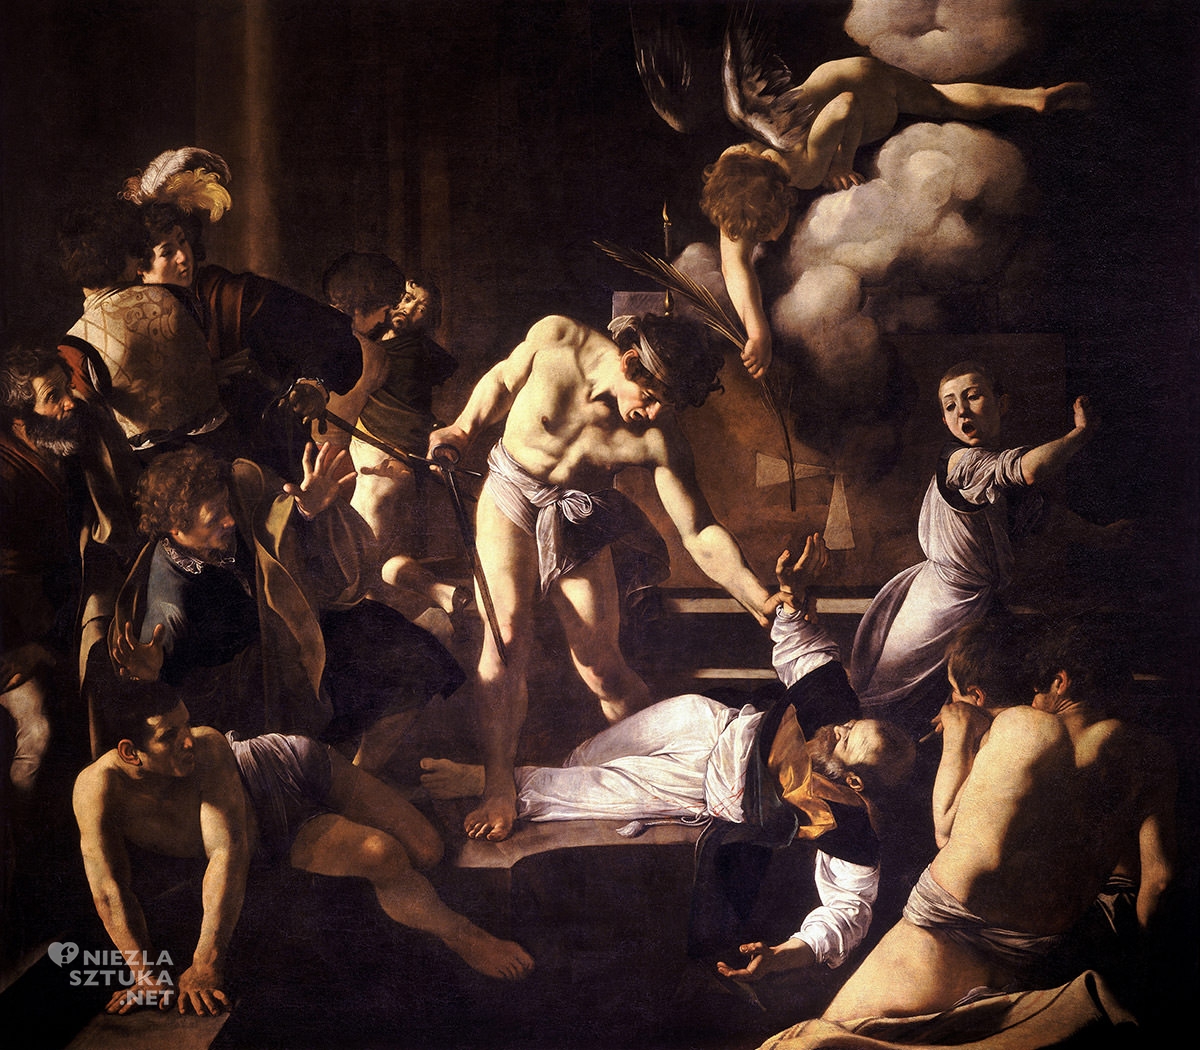 Caravaggio, Męczeństwo świętego Mateusza, sztuka włoska, niezła sztuka